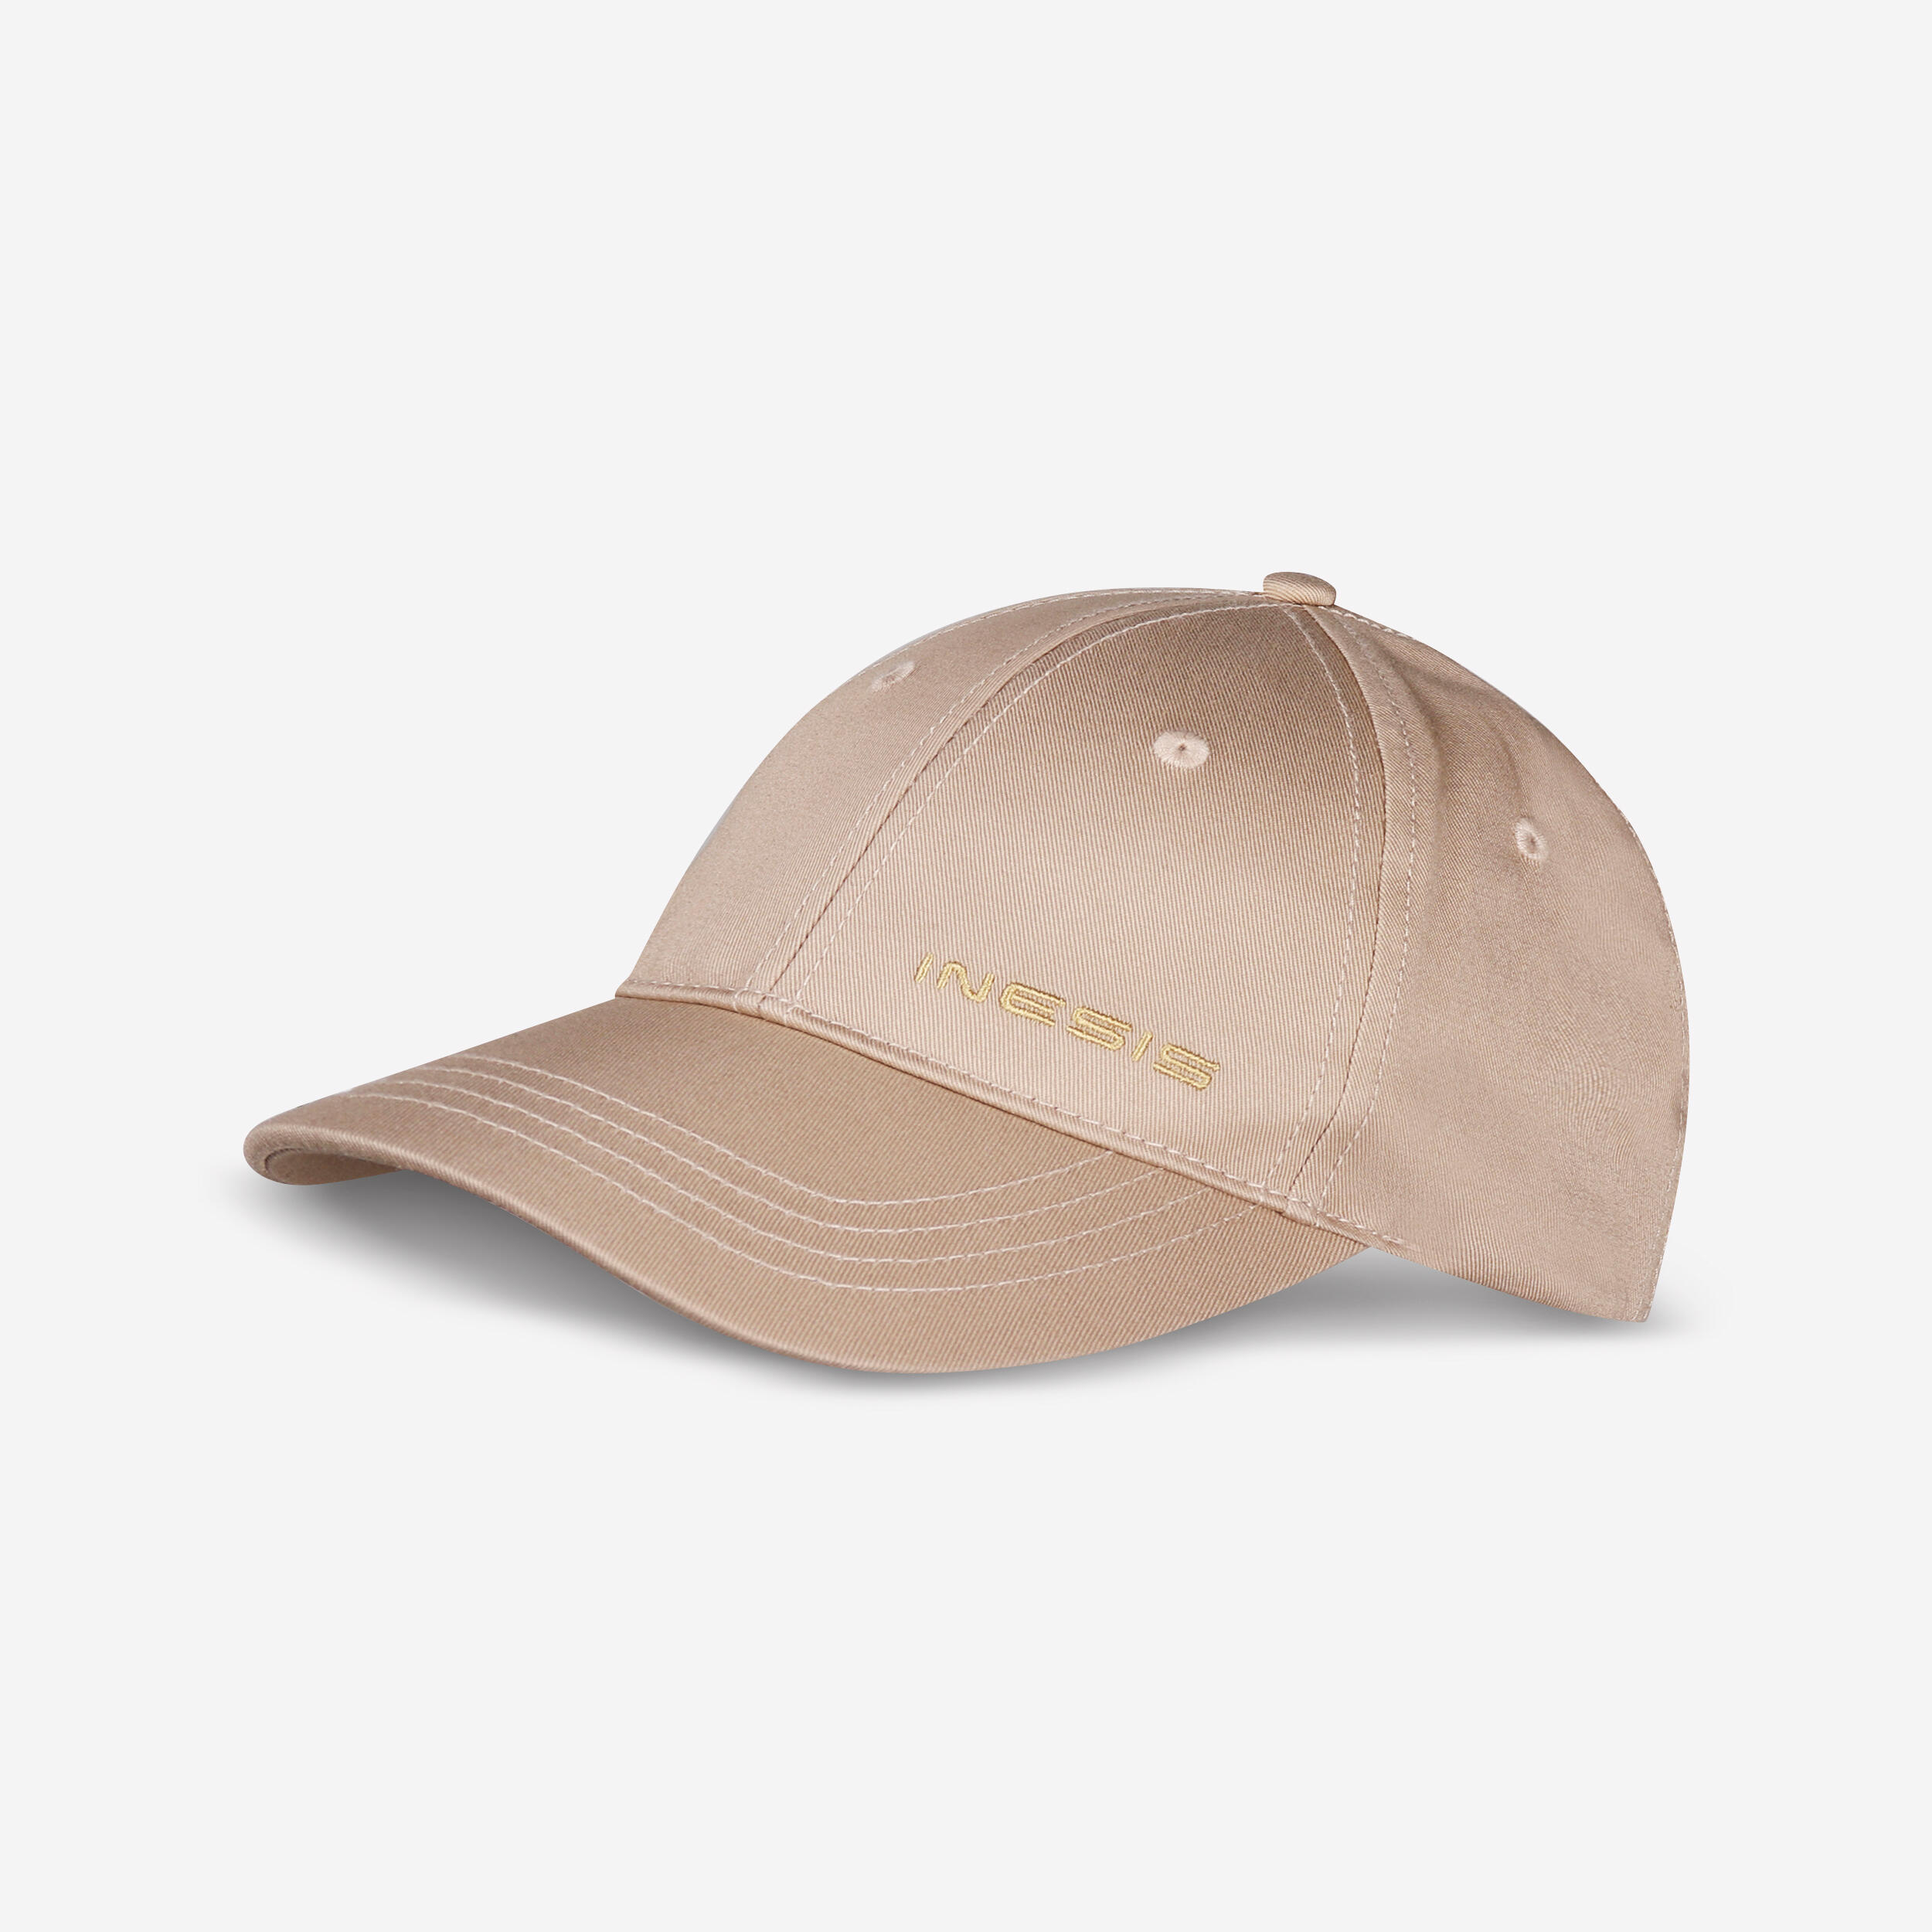 INESIS Adult's golf cap - MW 500 beige